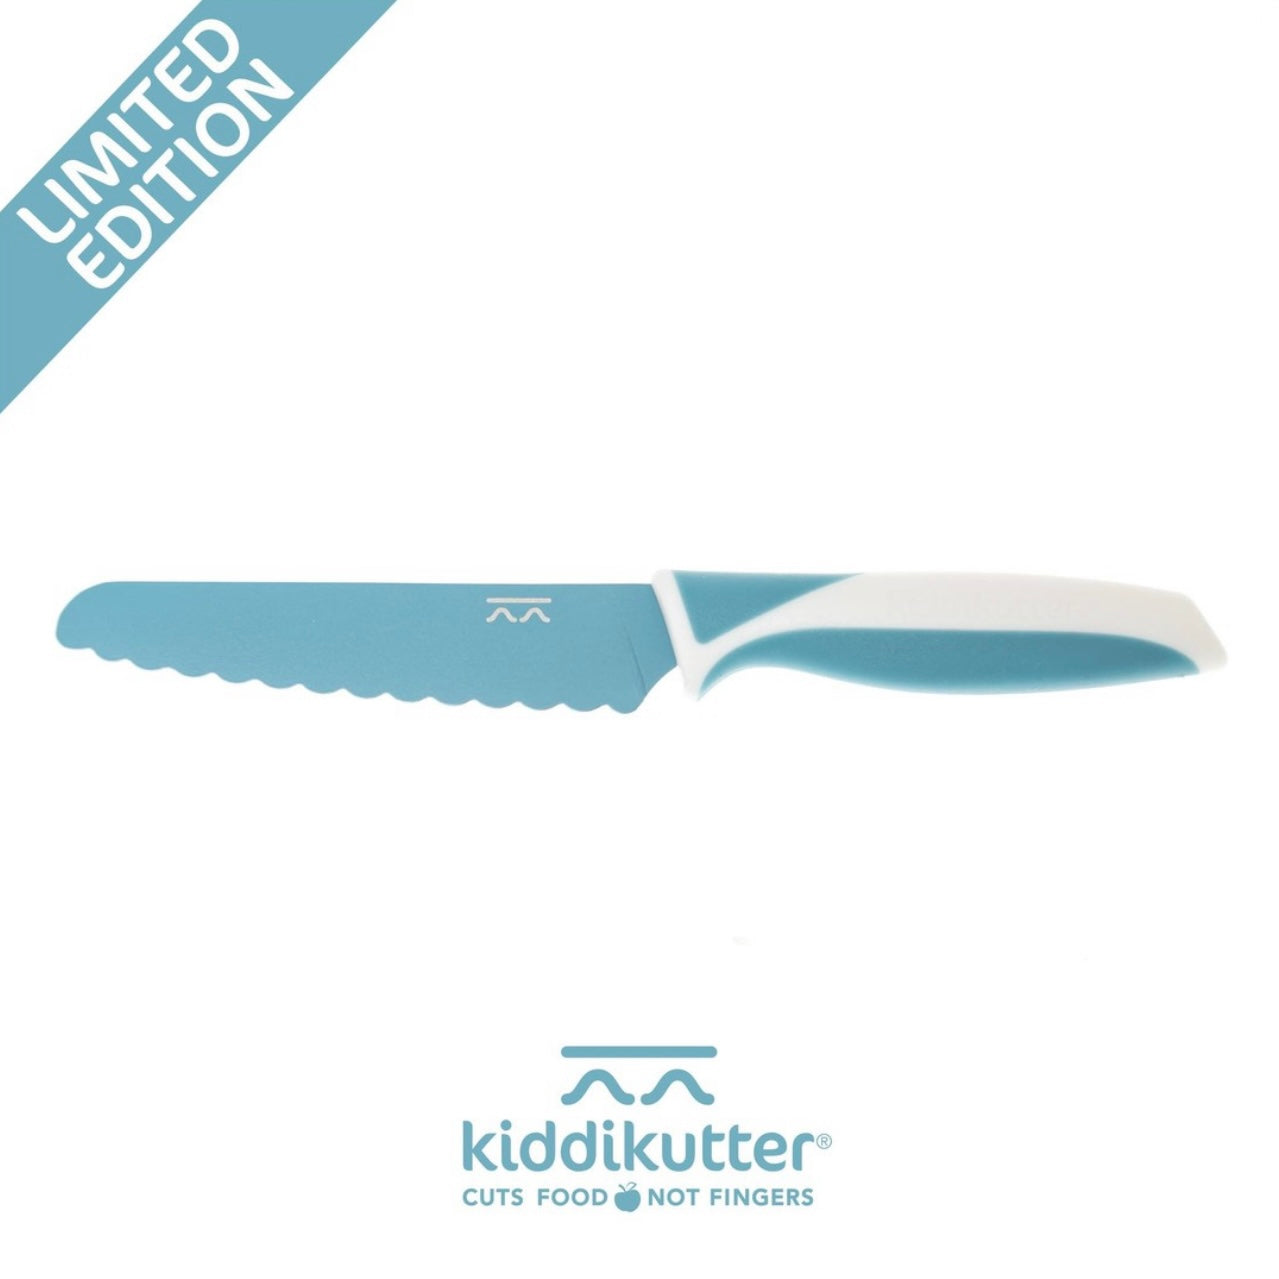 KiddiKutter Knife - NEW Improved Design